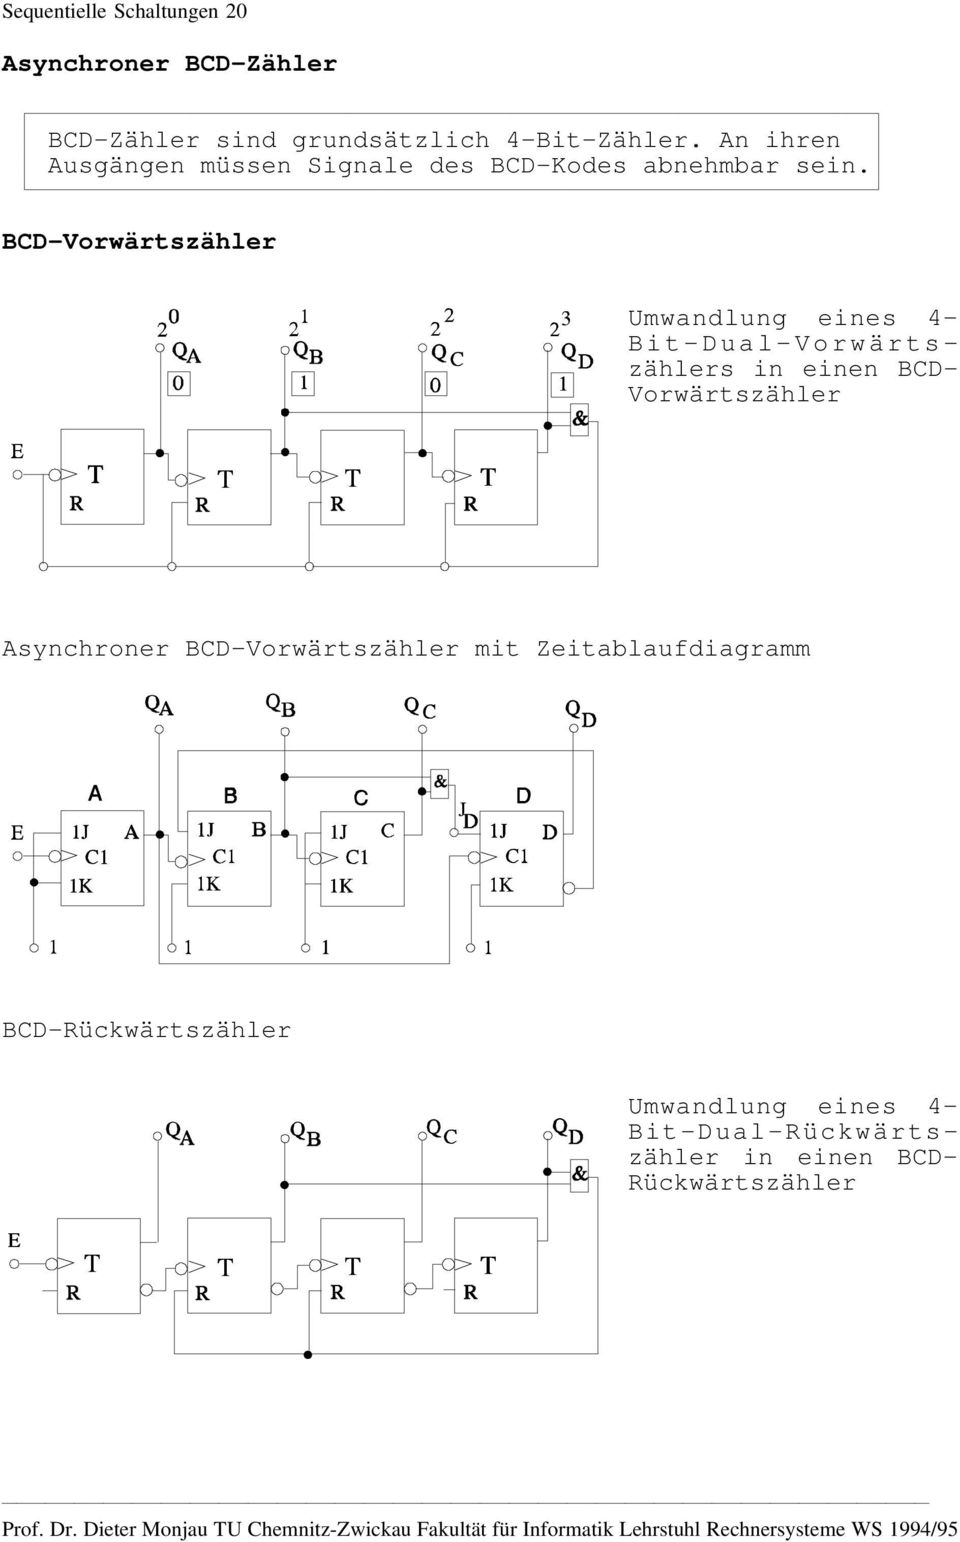 BCD-Vorwärszähler Umwandlung eines 4- Bi-Dual-Vorwä rszählers in einen BCD- Vorwärszähler